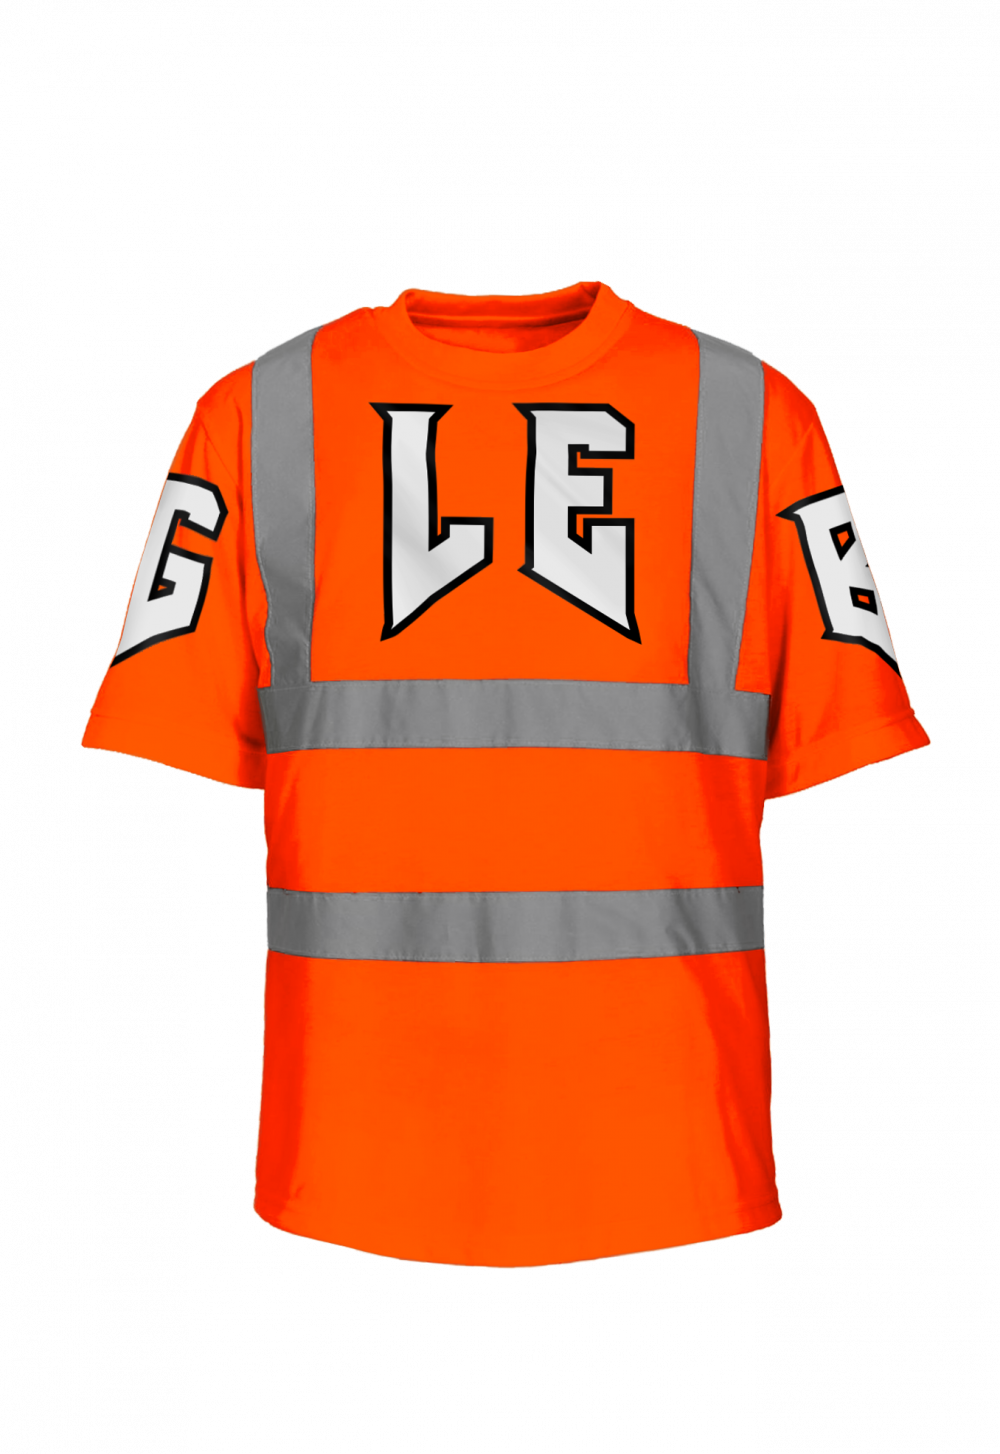 GLEB neon / reflex orange